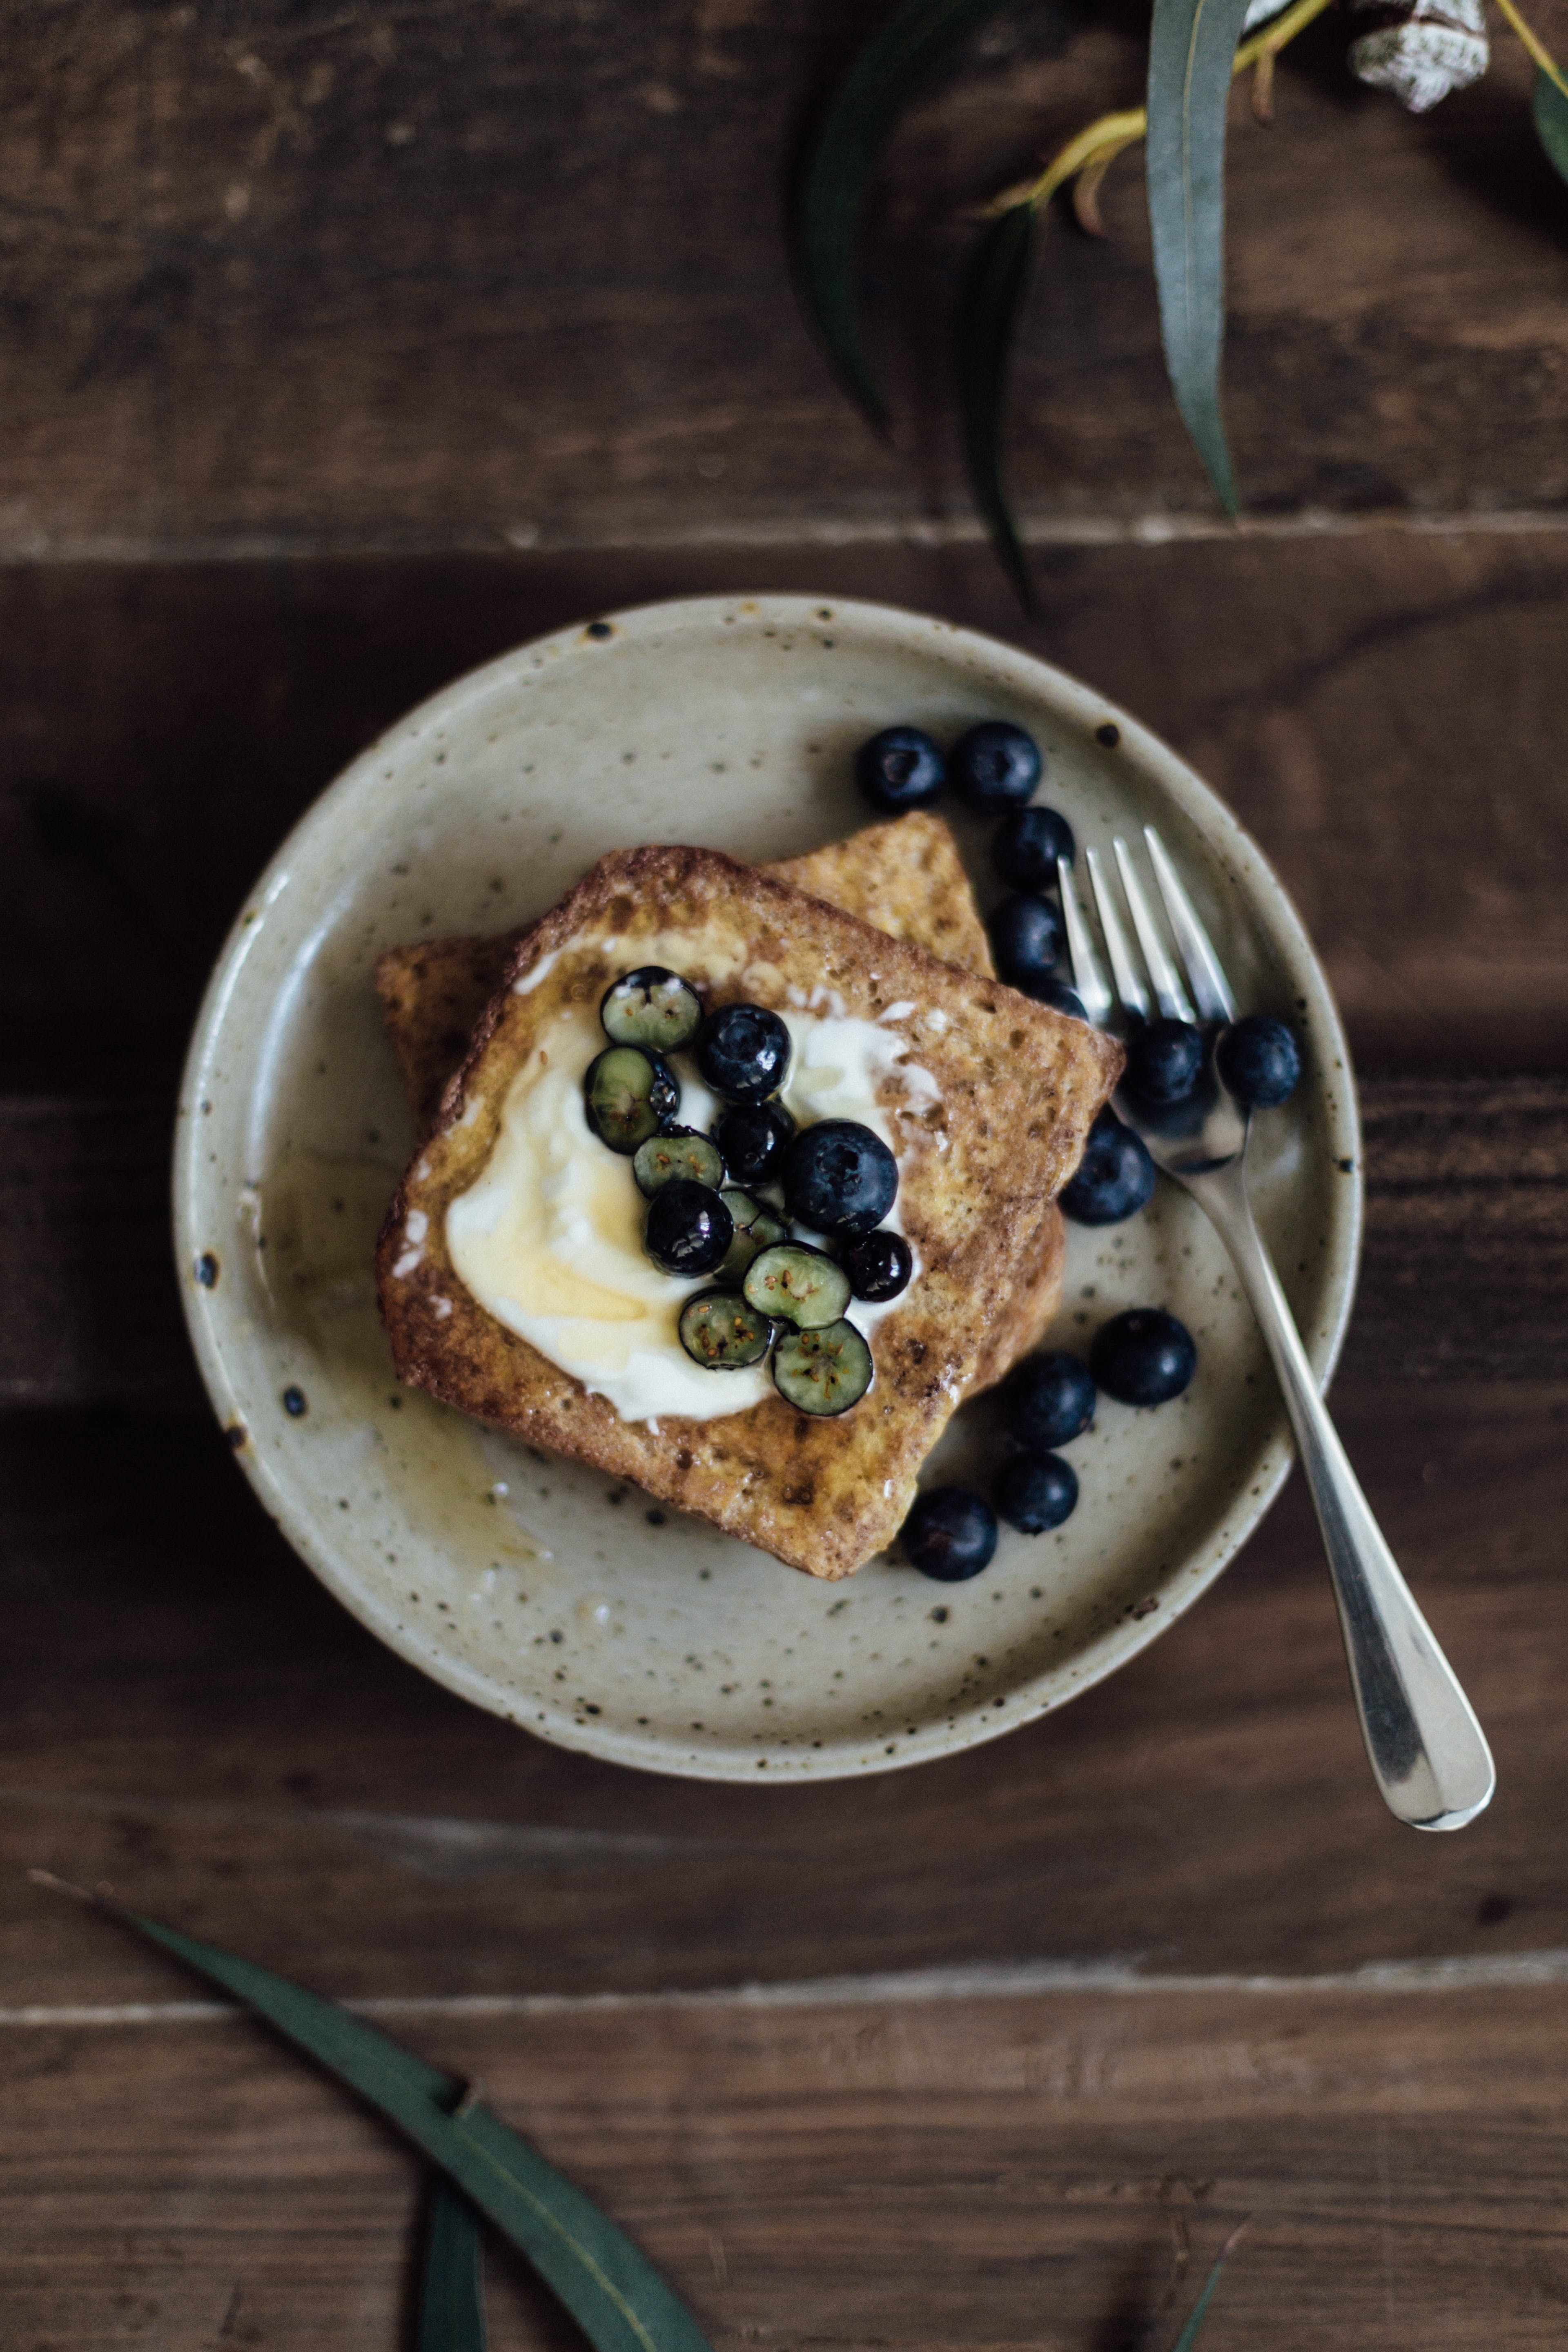 Toast with berries breakfast | Source: Pexels